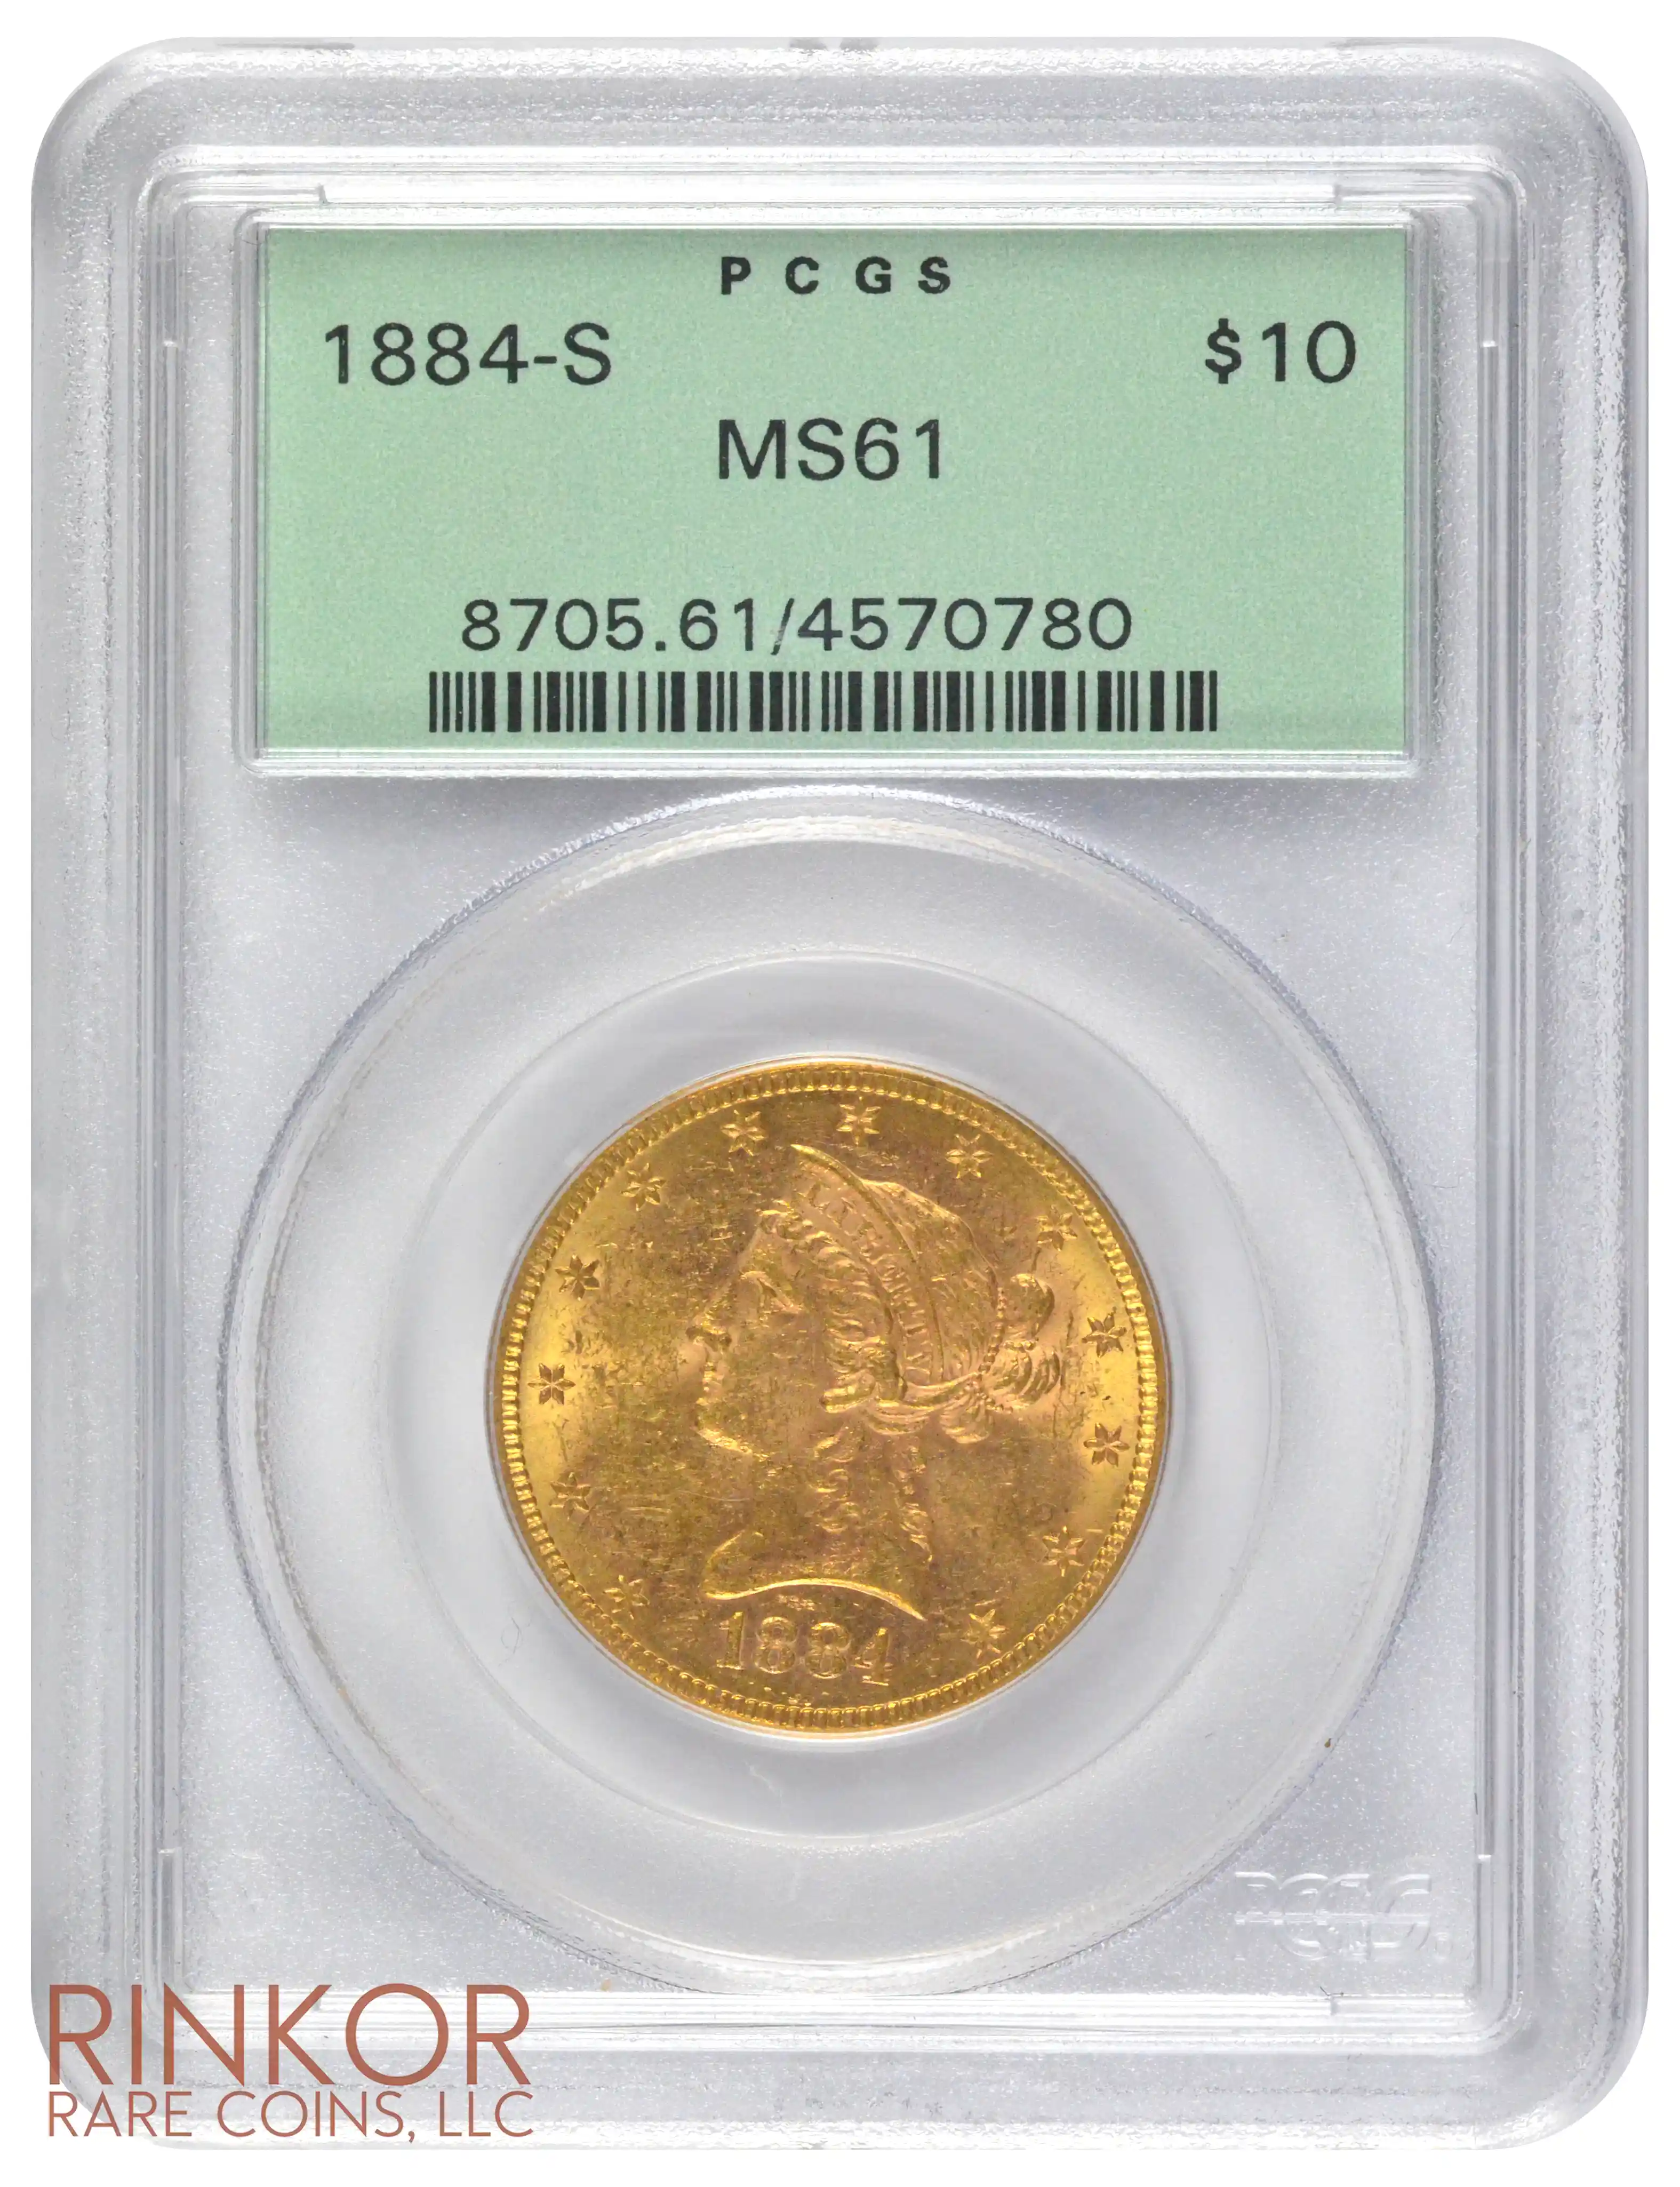 1884-S $10 Liberty Head PCGS MS 61 